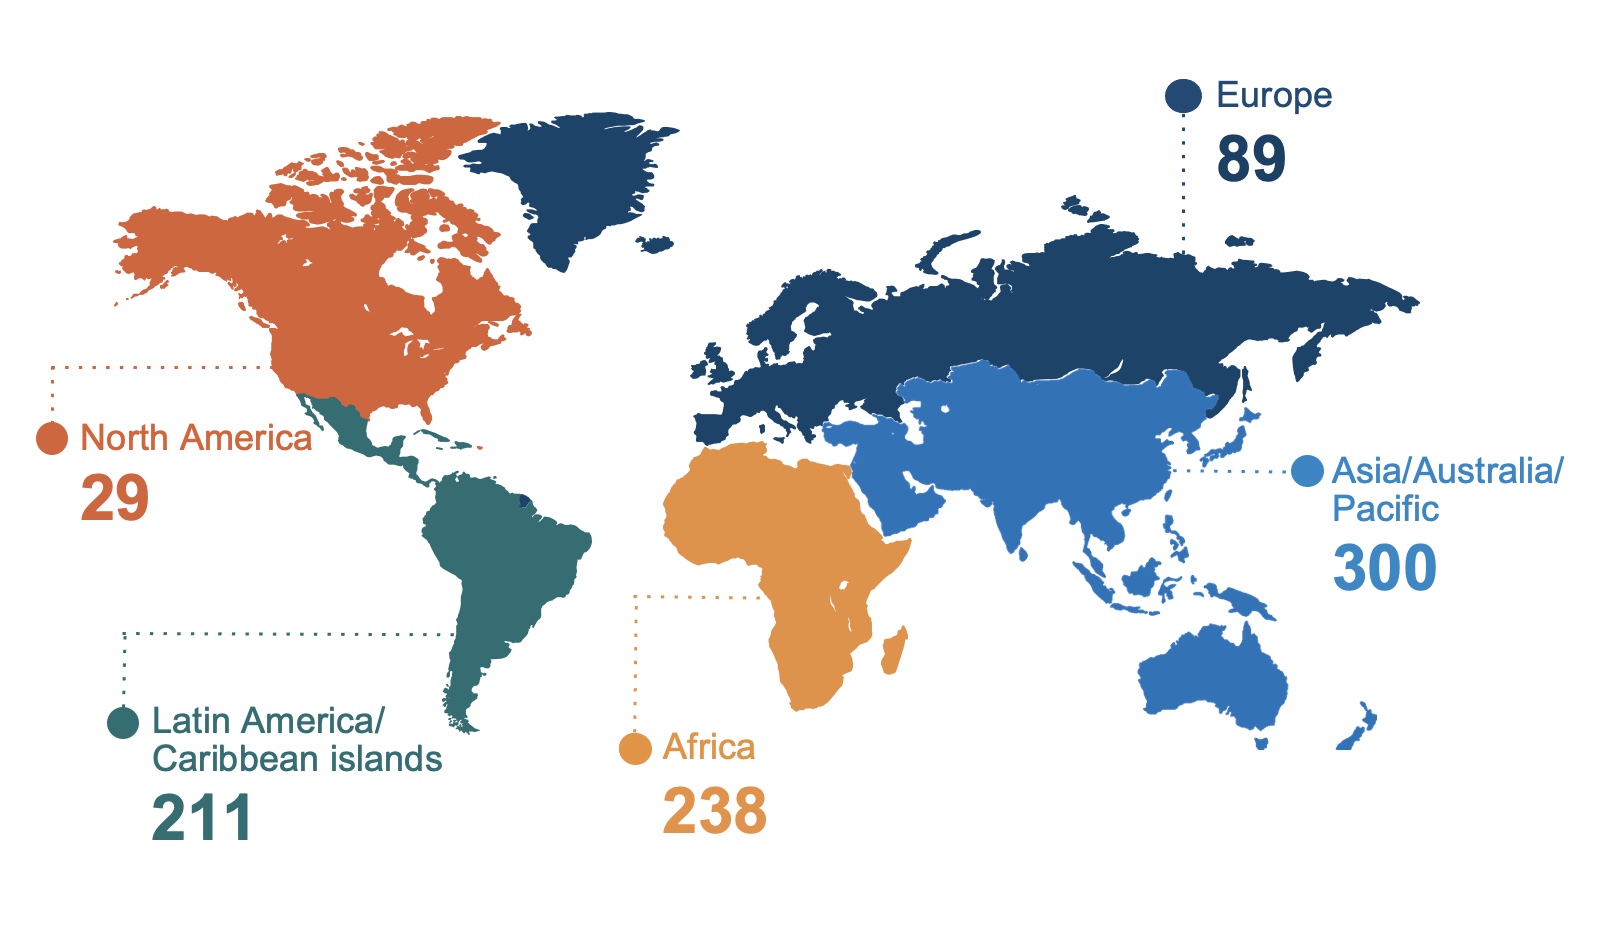 Number of Fellows per region: Europe: 89; Asia/Australia/Pacific: 300; Africa: 238; Latin America/Caribbean islands: 211; North America: 29